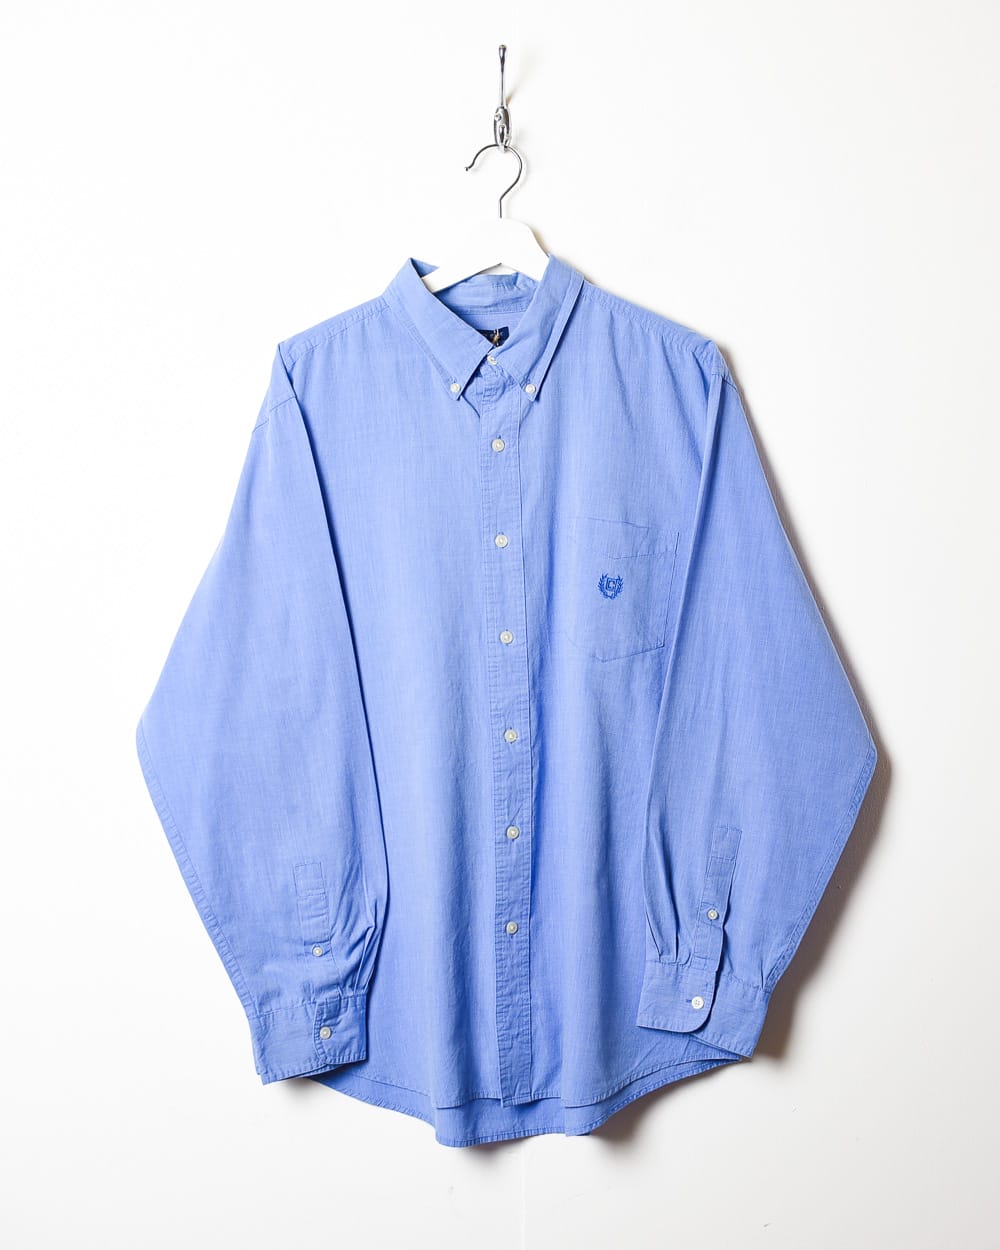 Blue Chaps Ralph Lauren Shirt - X-Large